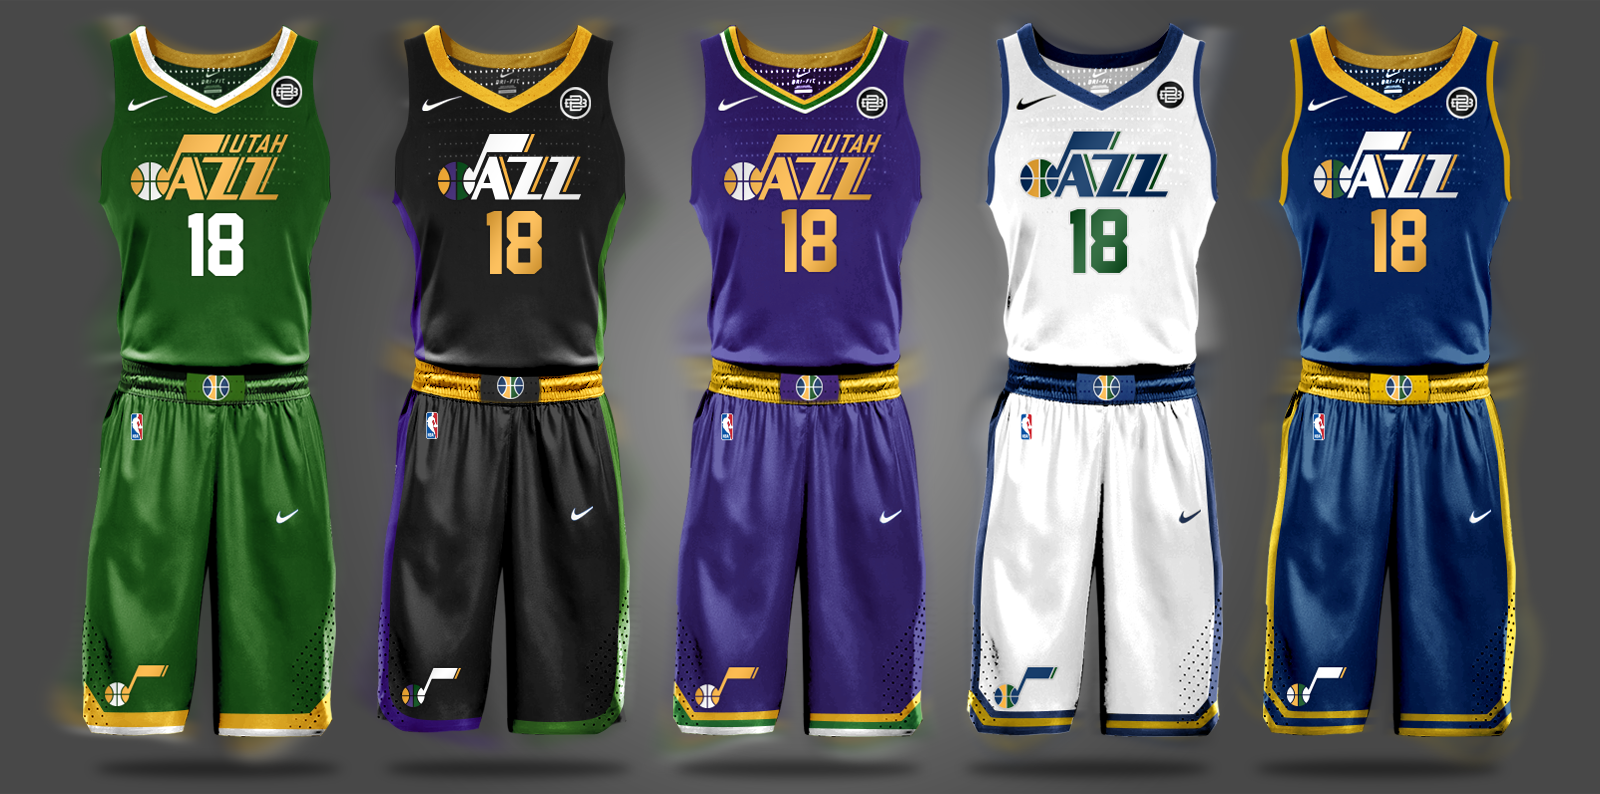 Utah Jazz: New Nike uniforms are among the NBA's best